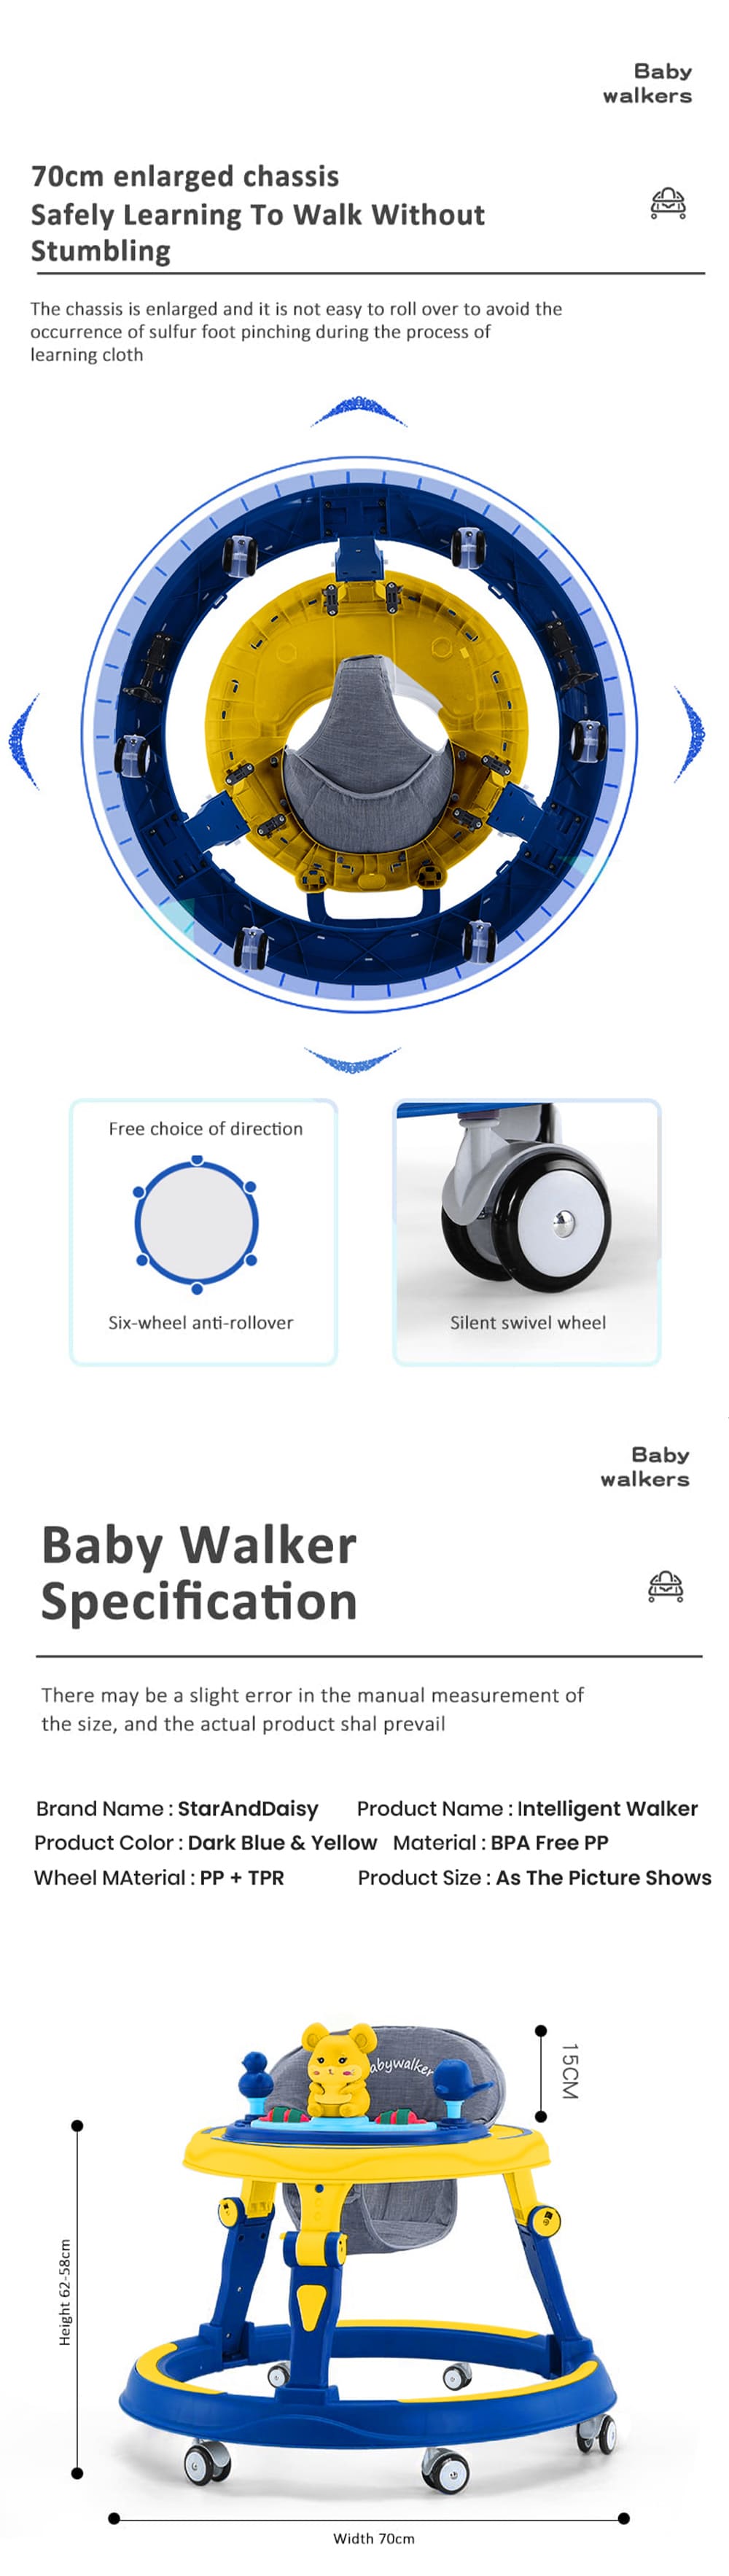 Specification of Intelligent Baby Walker